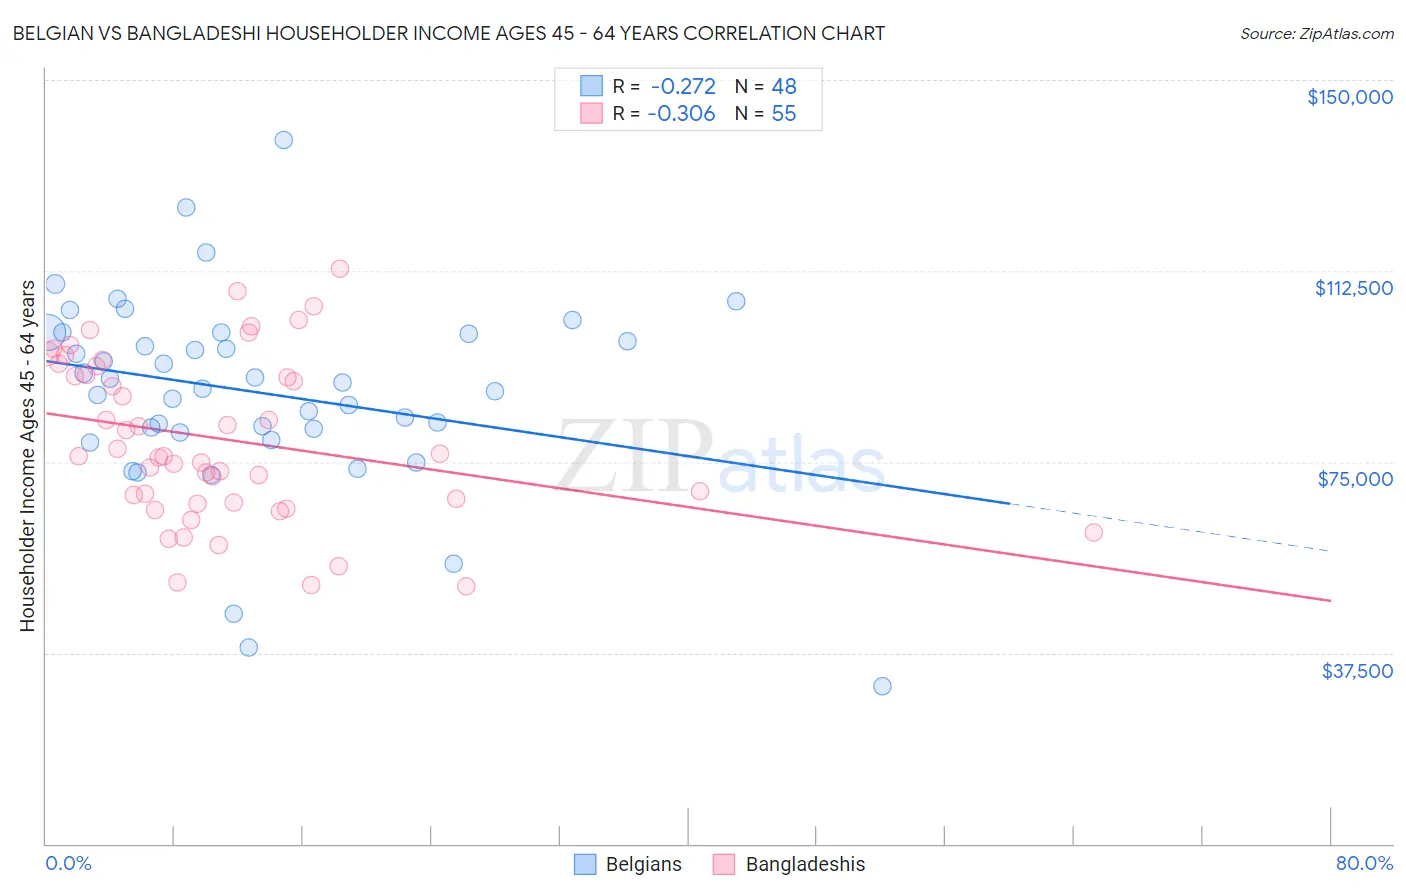 Belgian vs Bangladeshi Householder Income Ages 45 - 64 years